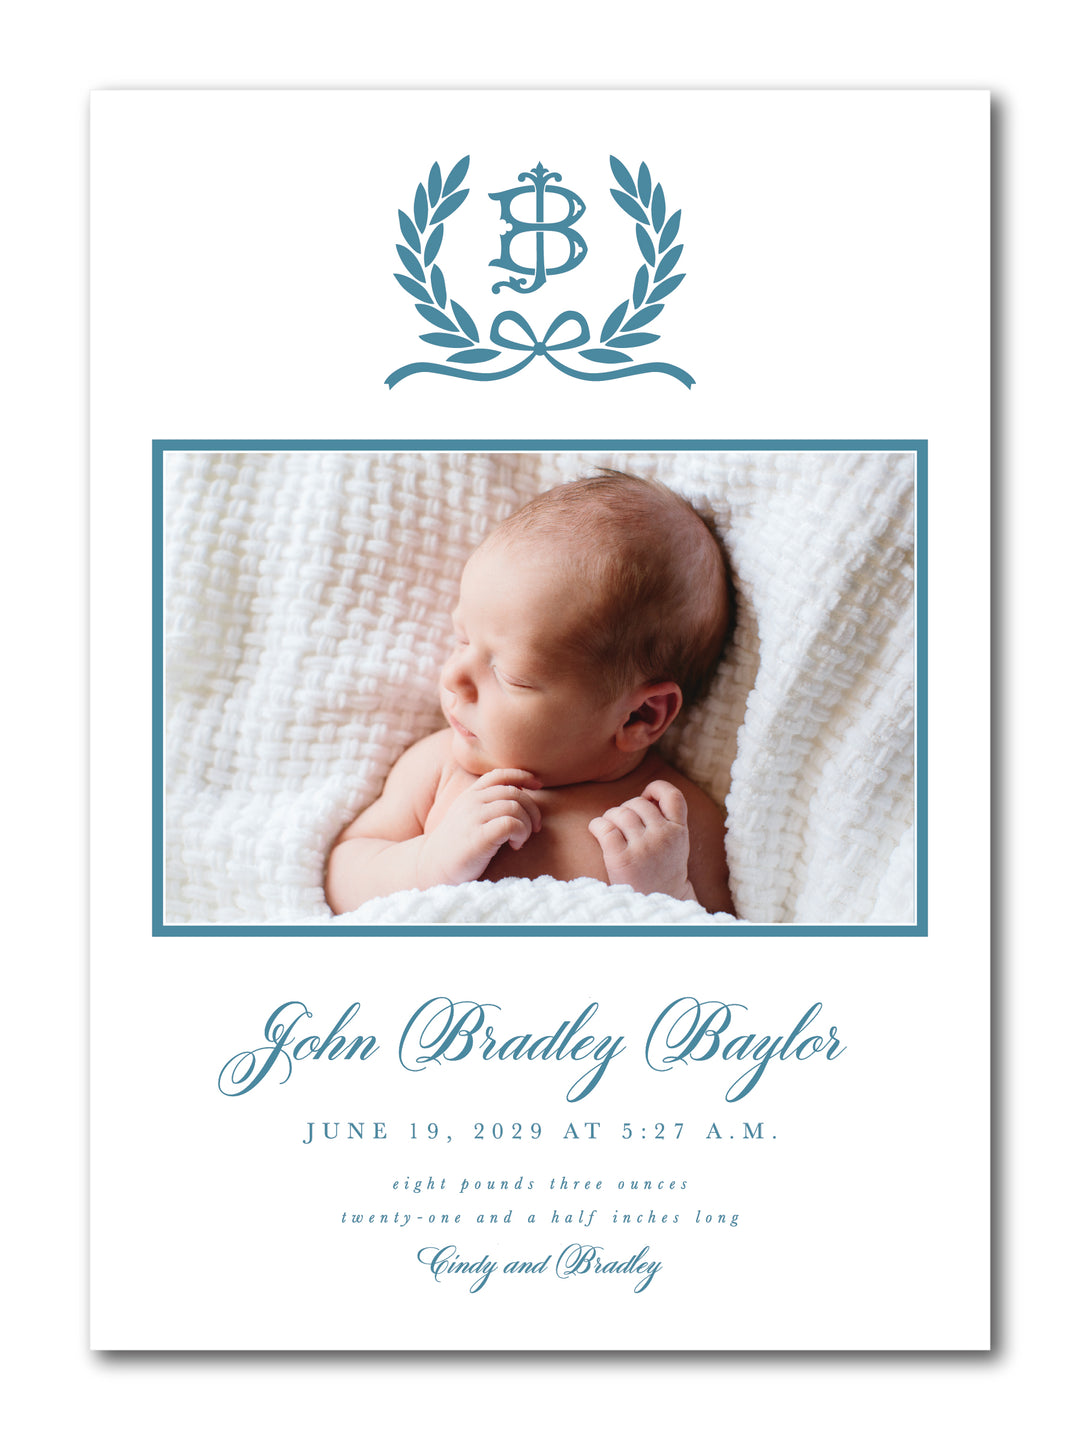 The John Bradley Birth Announcement